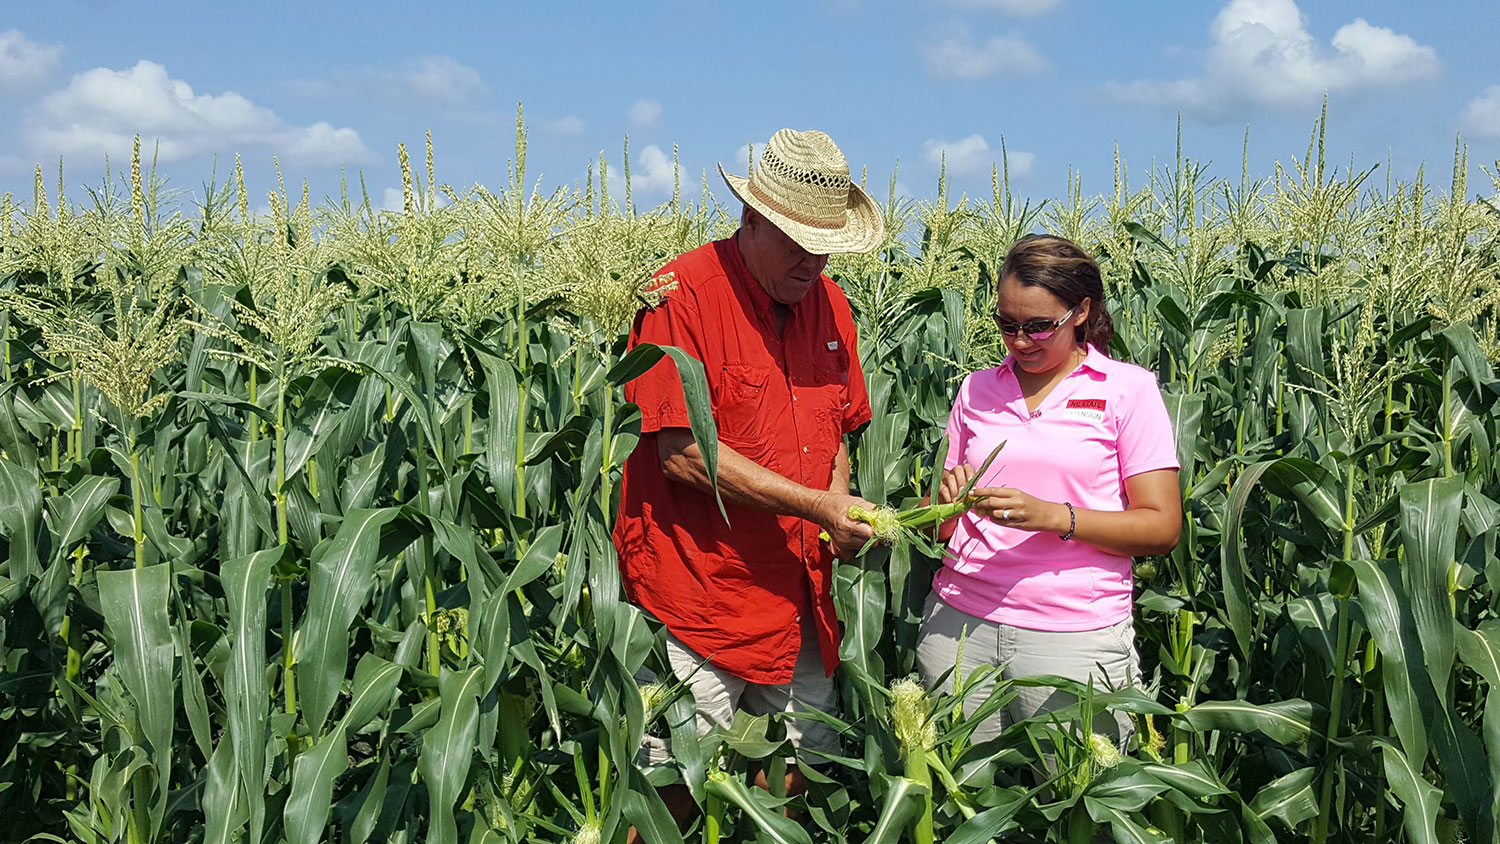 Man and woman examining corn in a corn field